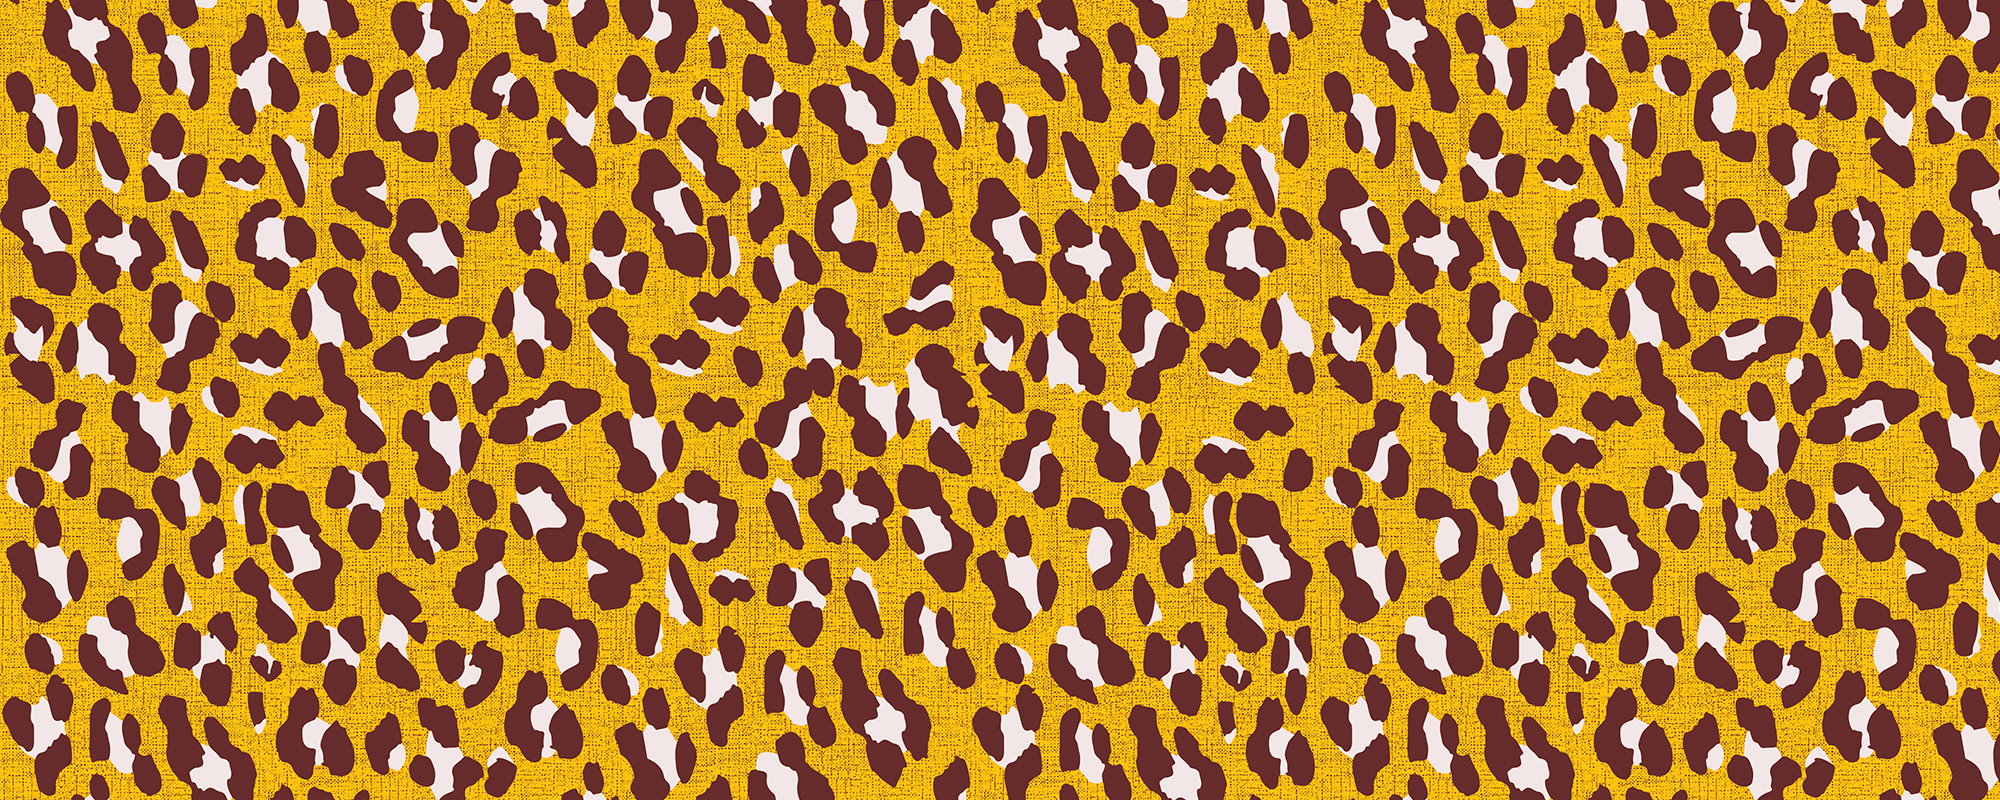 Leopard graphic wallpaper